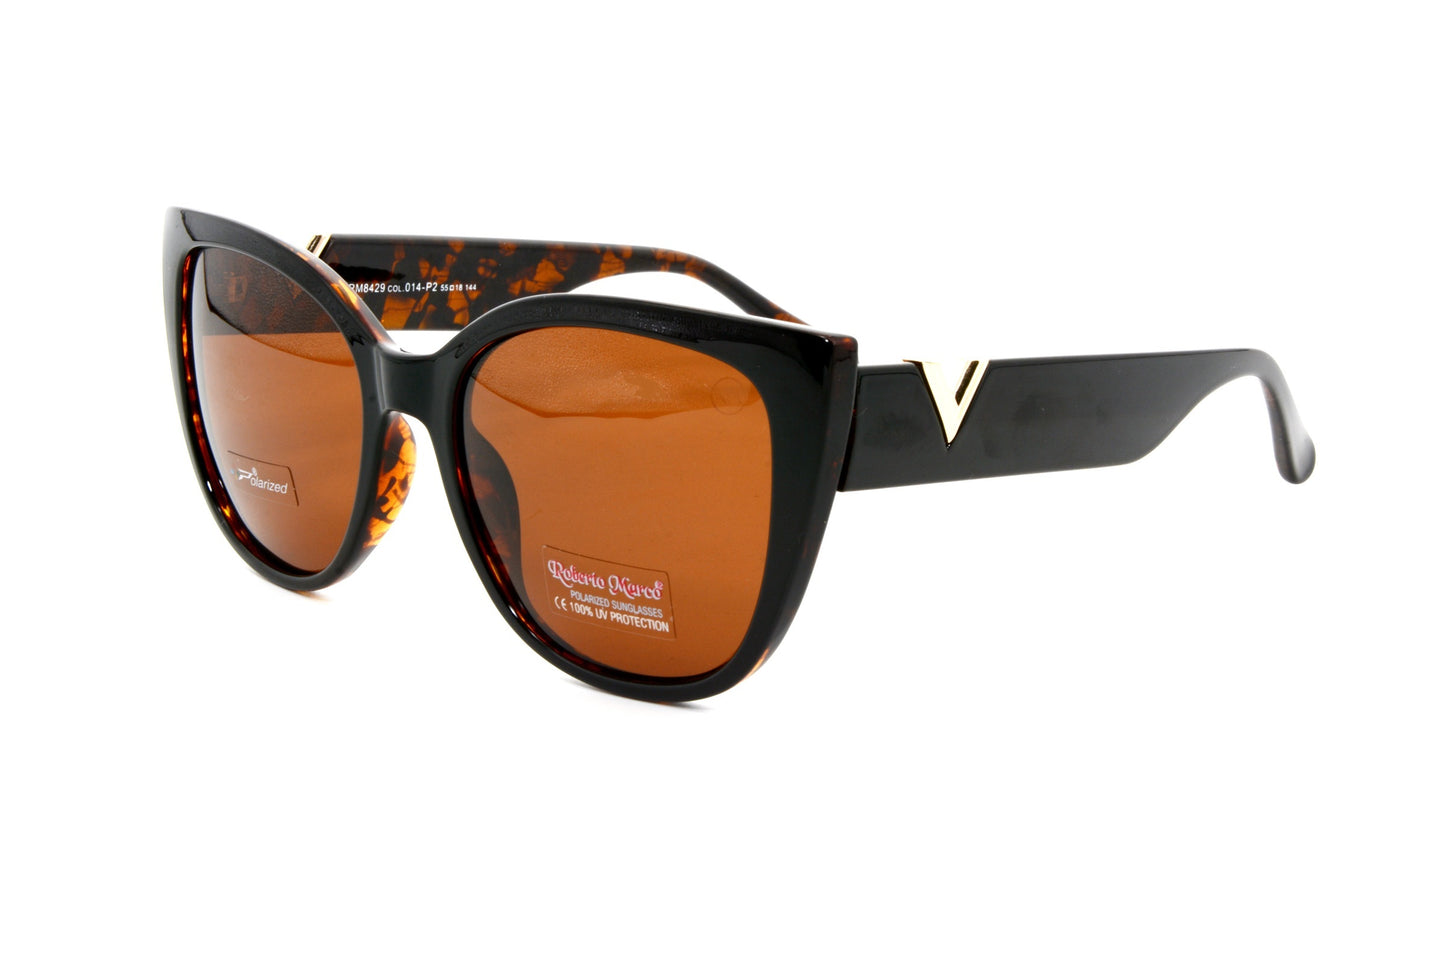 Roberto Marco sunglasses RM8429 014-P2